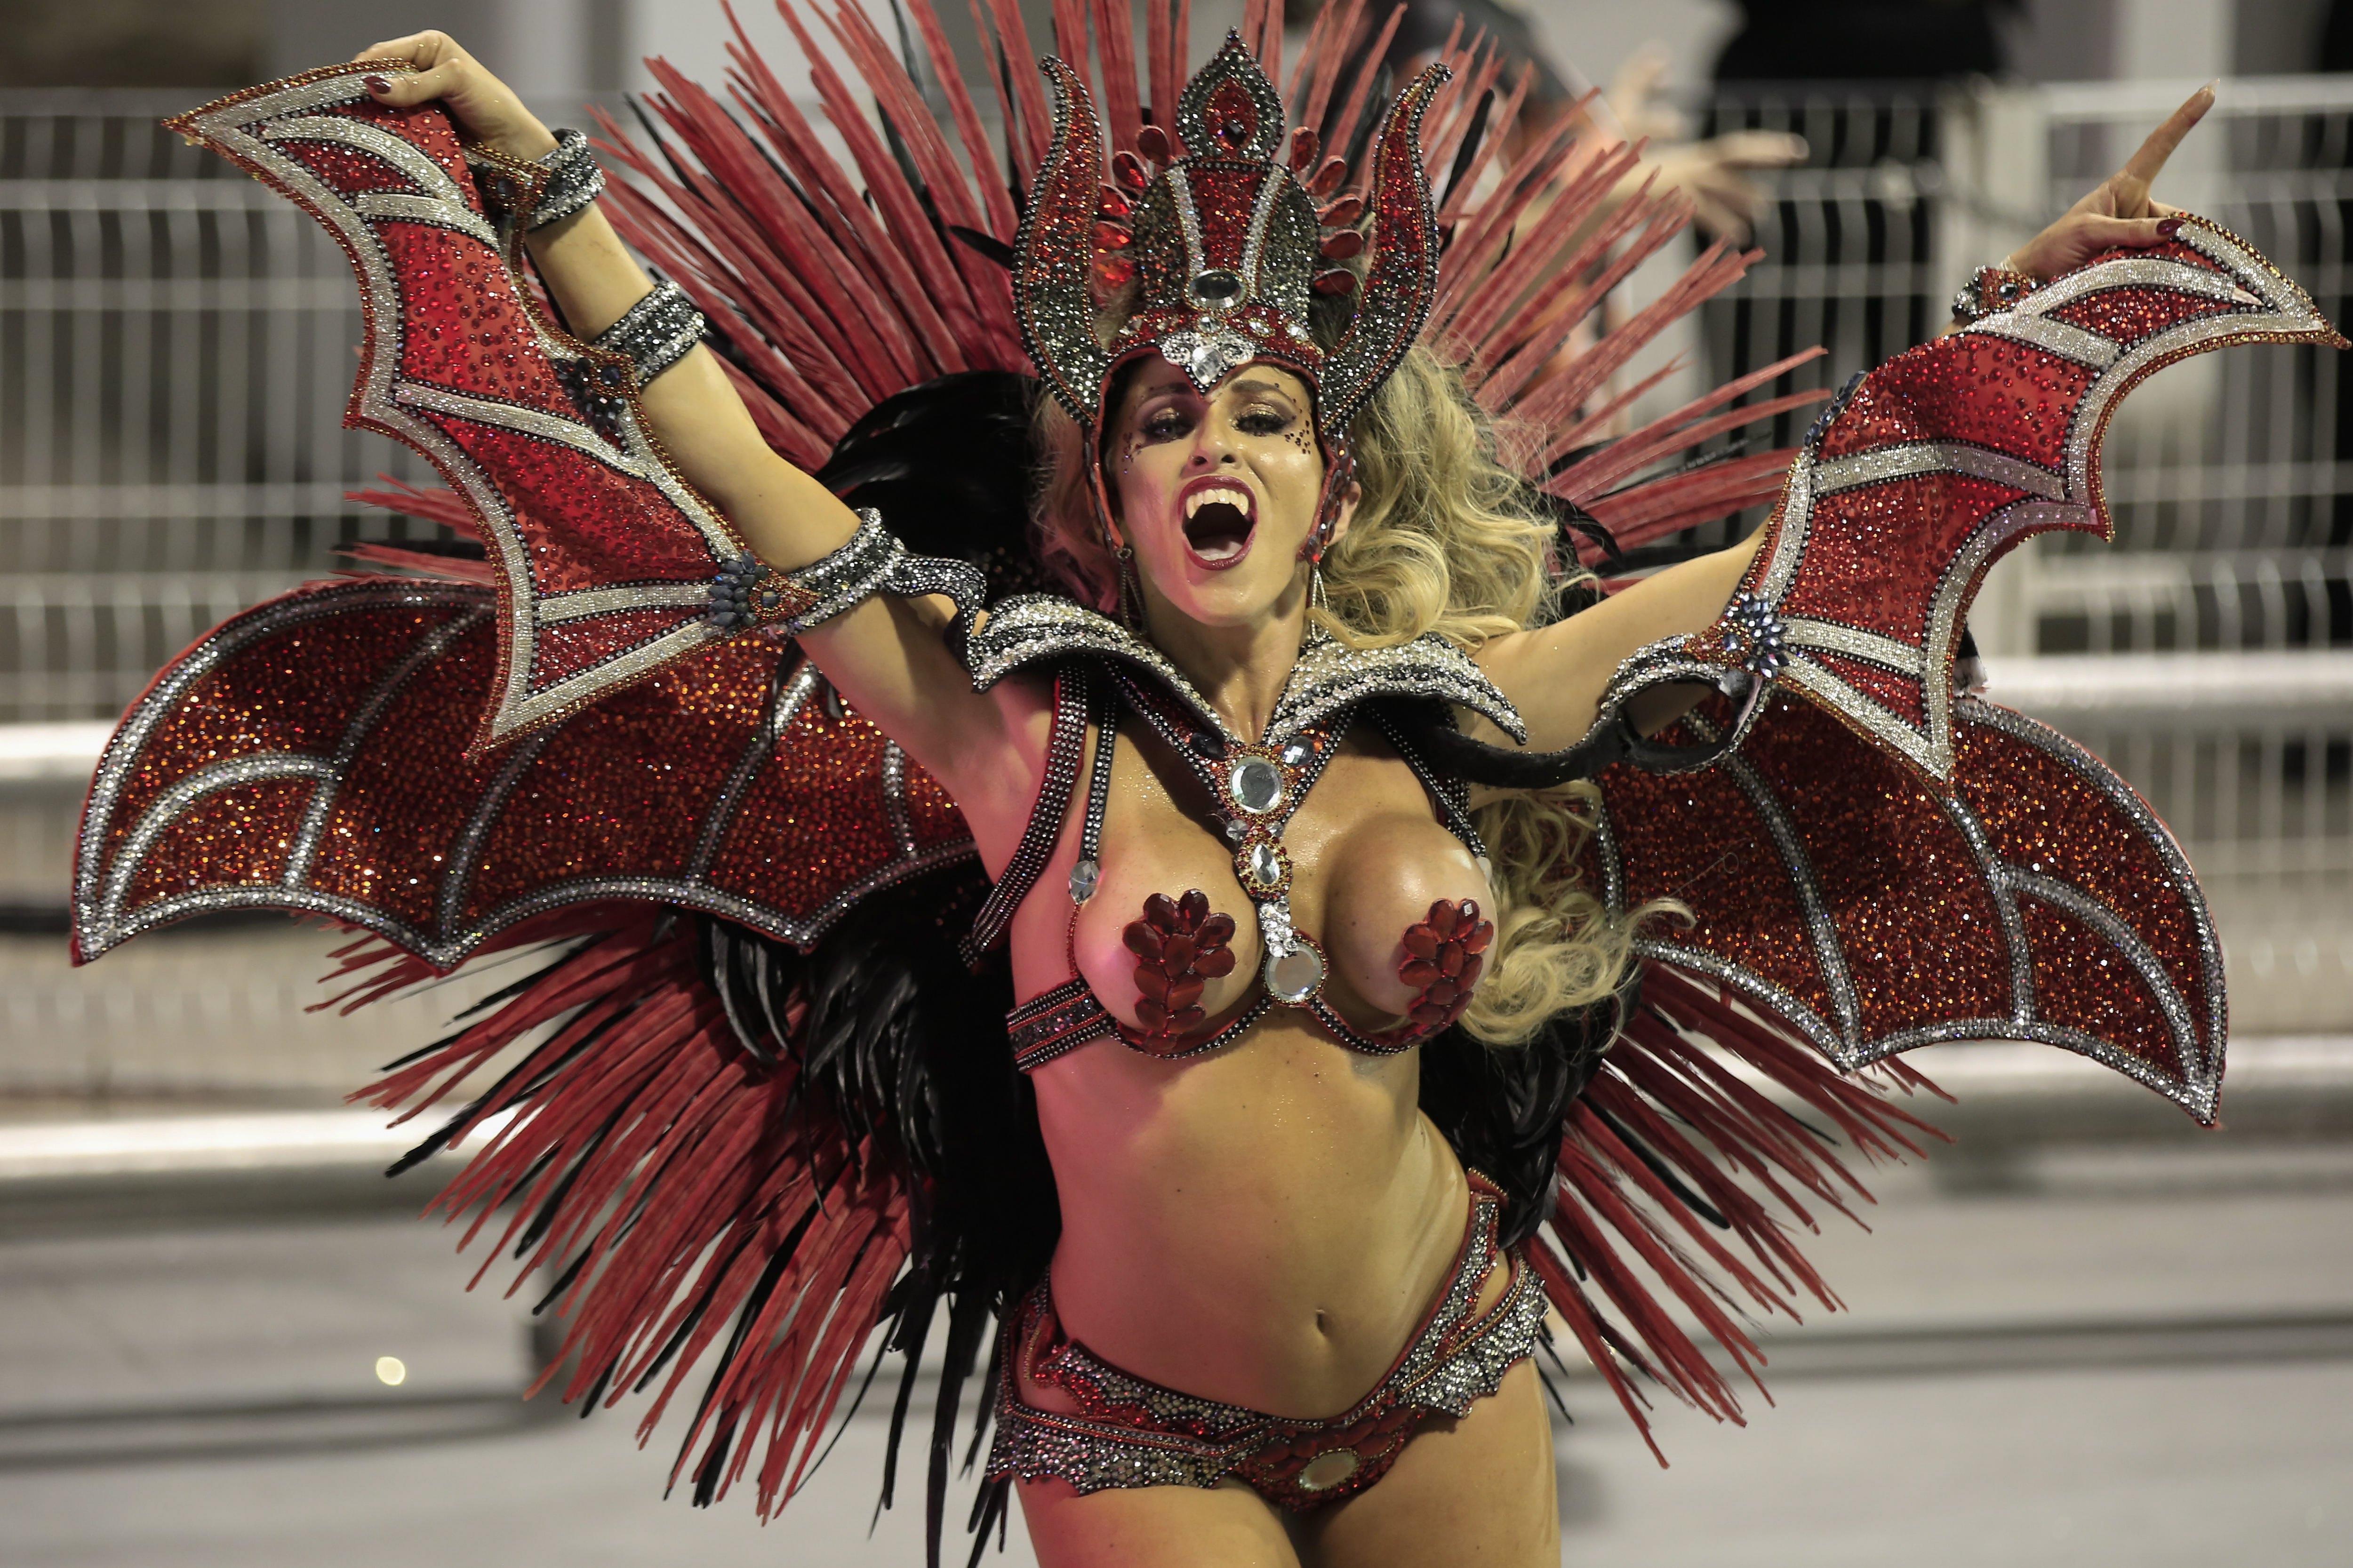 Brazil carnaval orgy hd pic photo